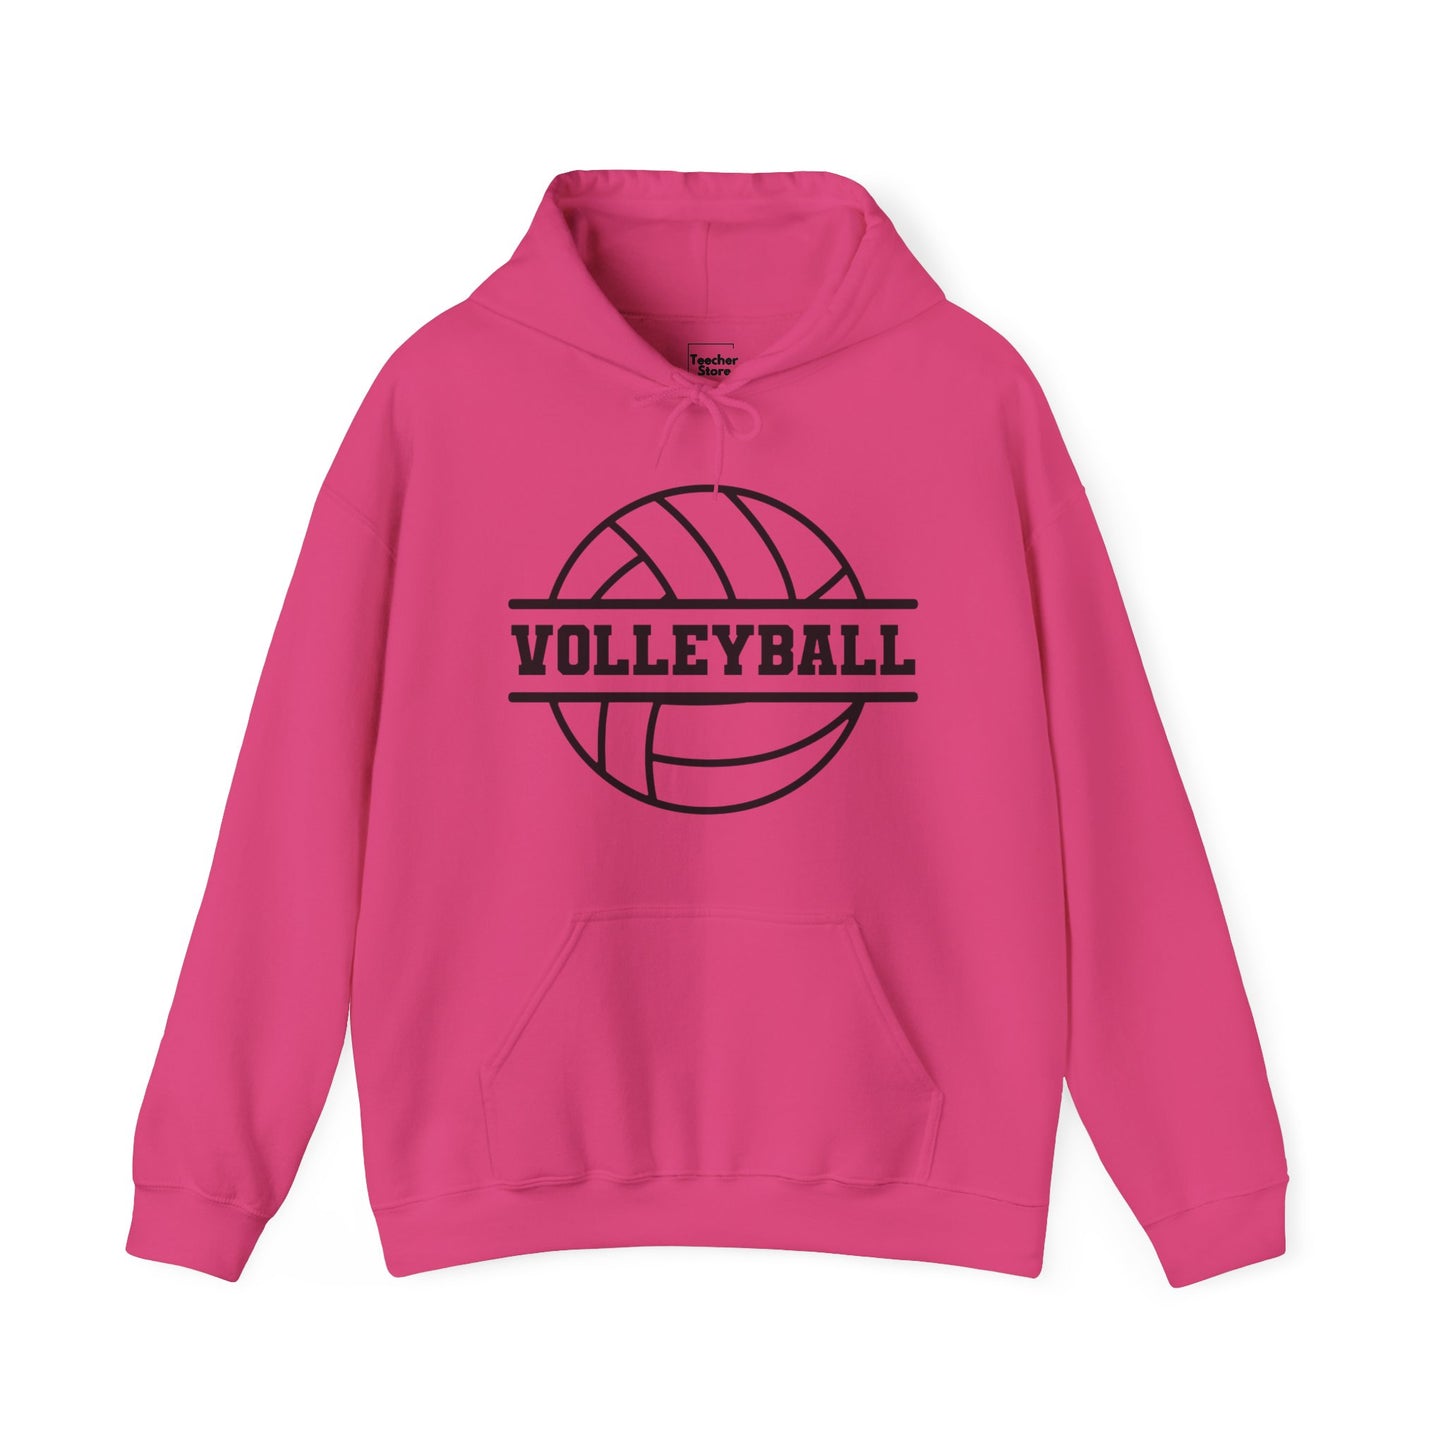 Volleyball Hooded Sweatshirt